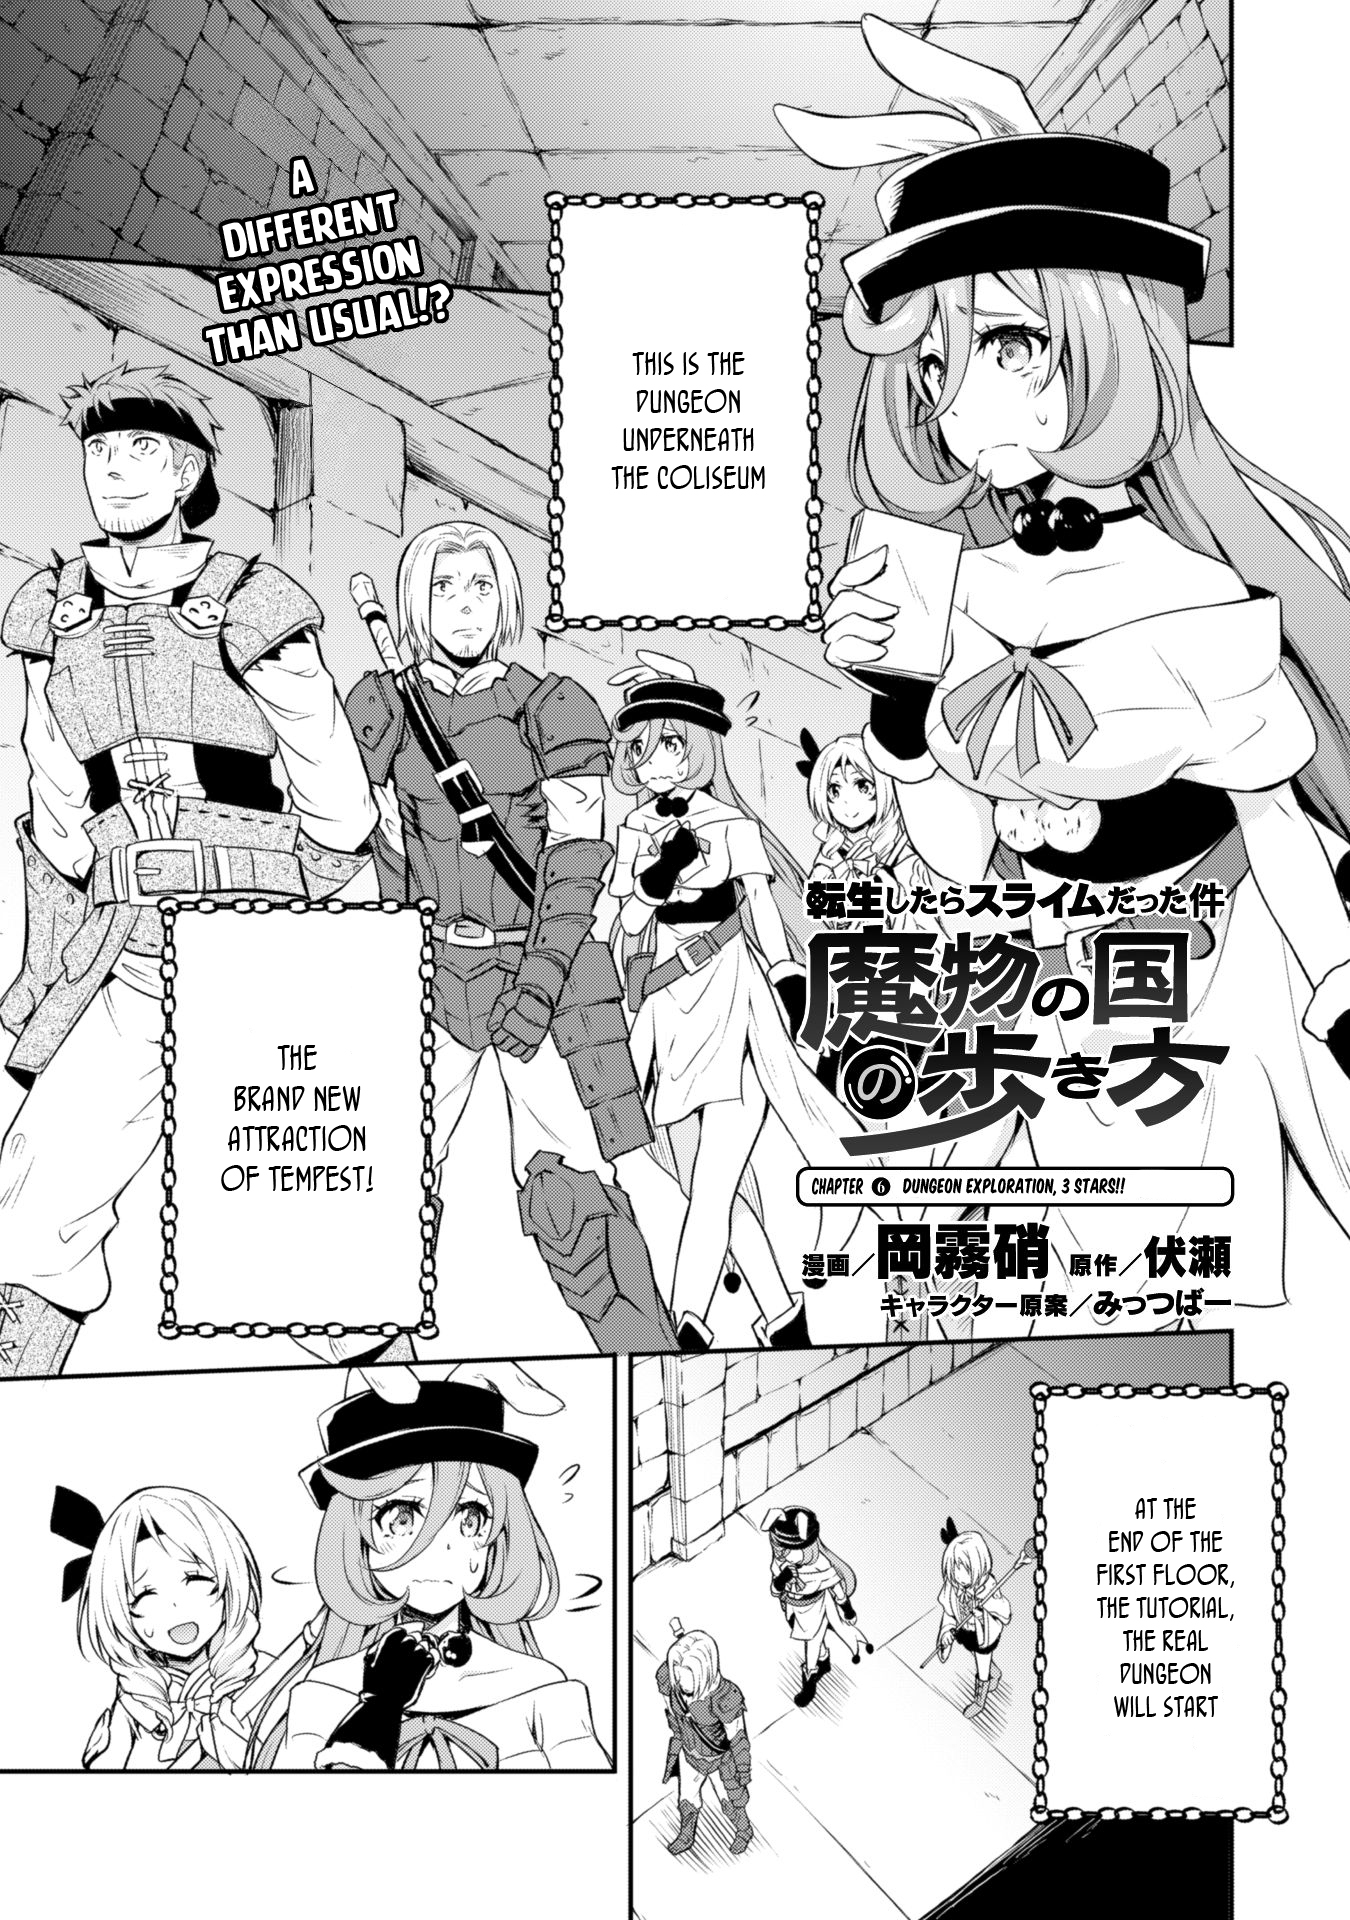 Tensei Shitara Slime Datta Ken: Tempest No Arukikata Vol.1 Chapter 6: Dungeon Exploration, 3 Stars!! - Picture 3